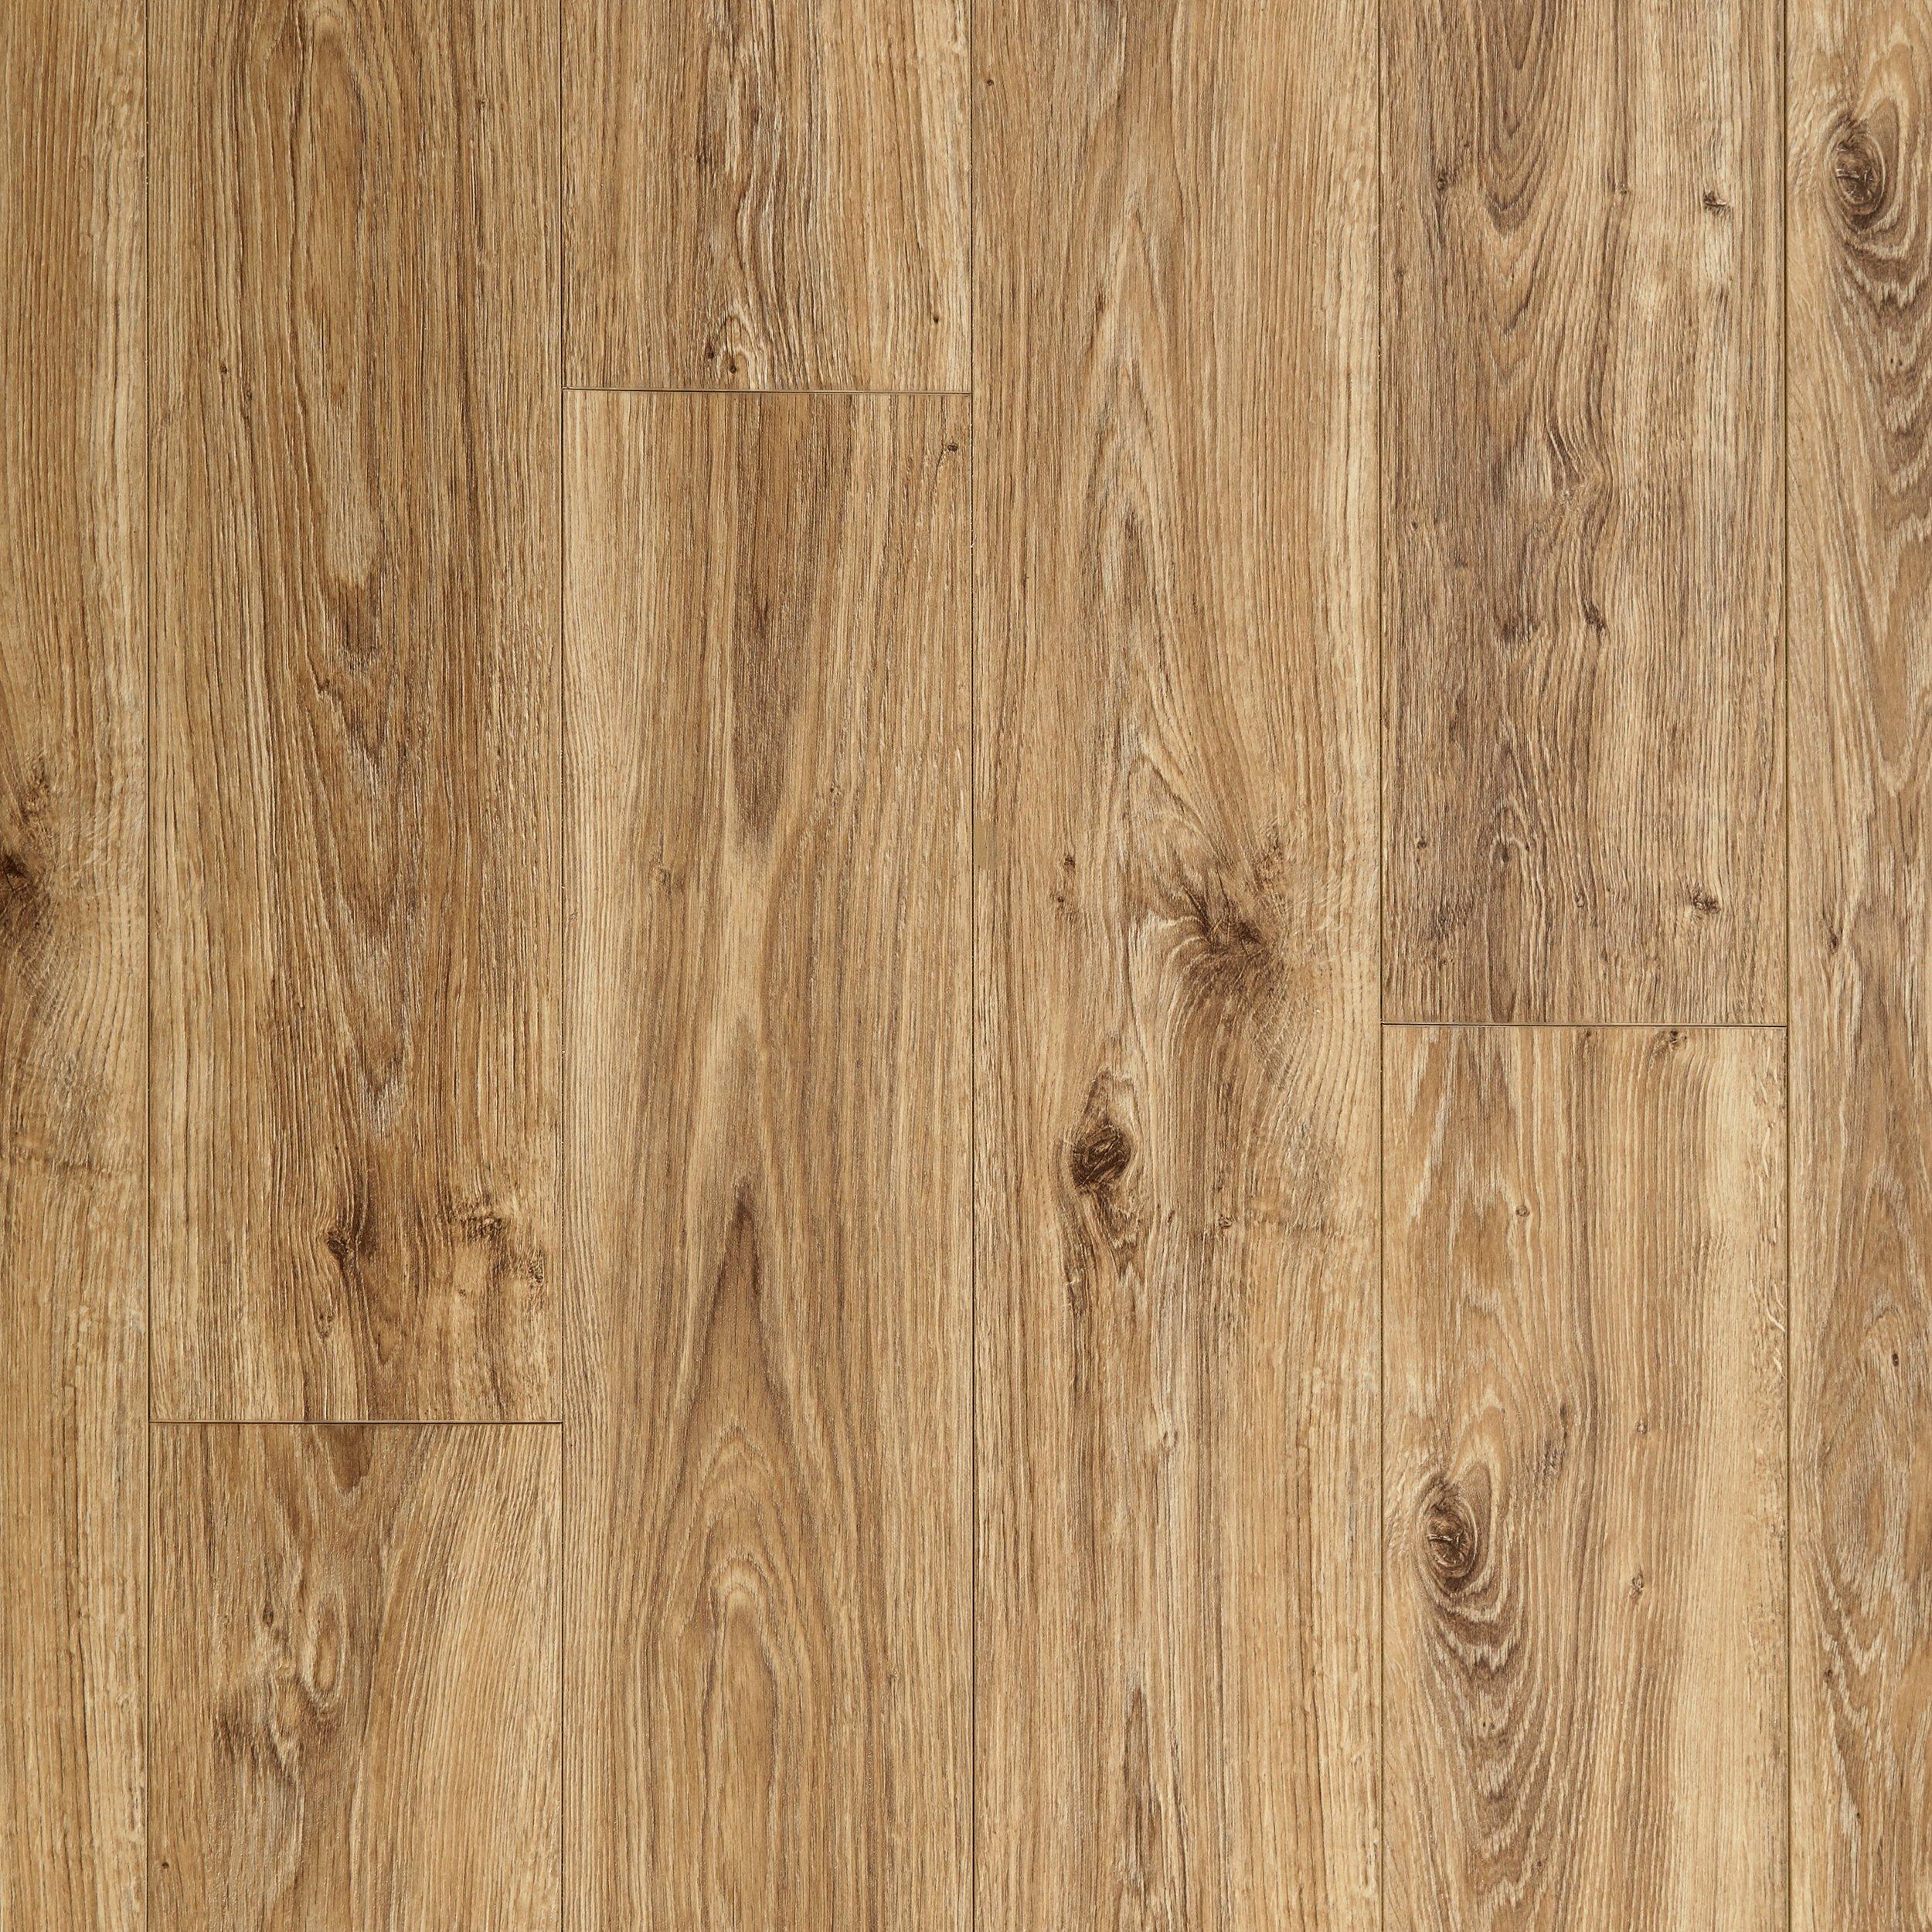 Natural Oak Water-Resistant Laminate | Floor and Decor